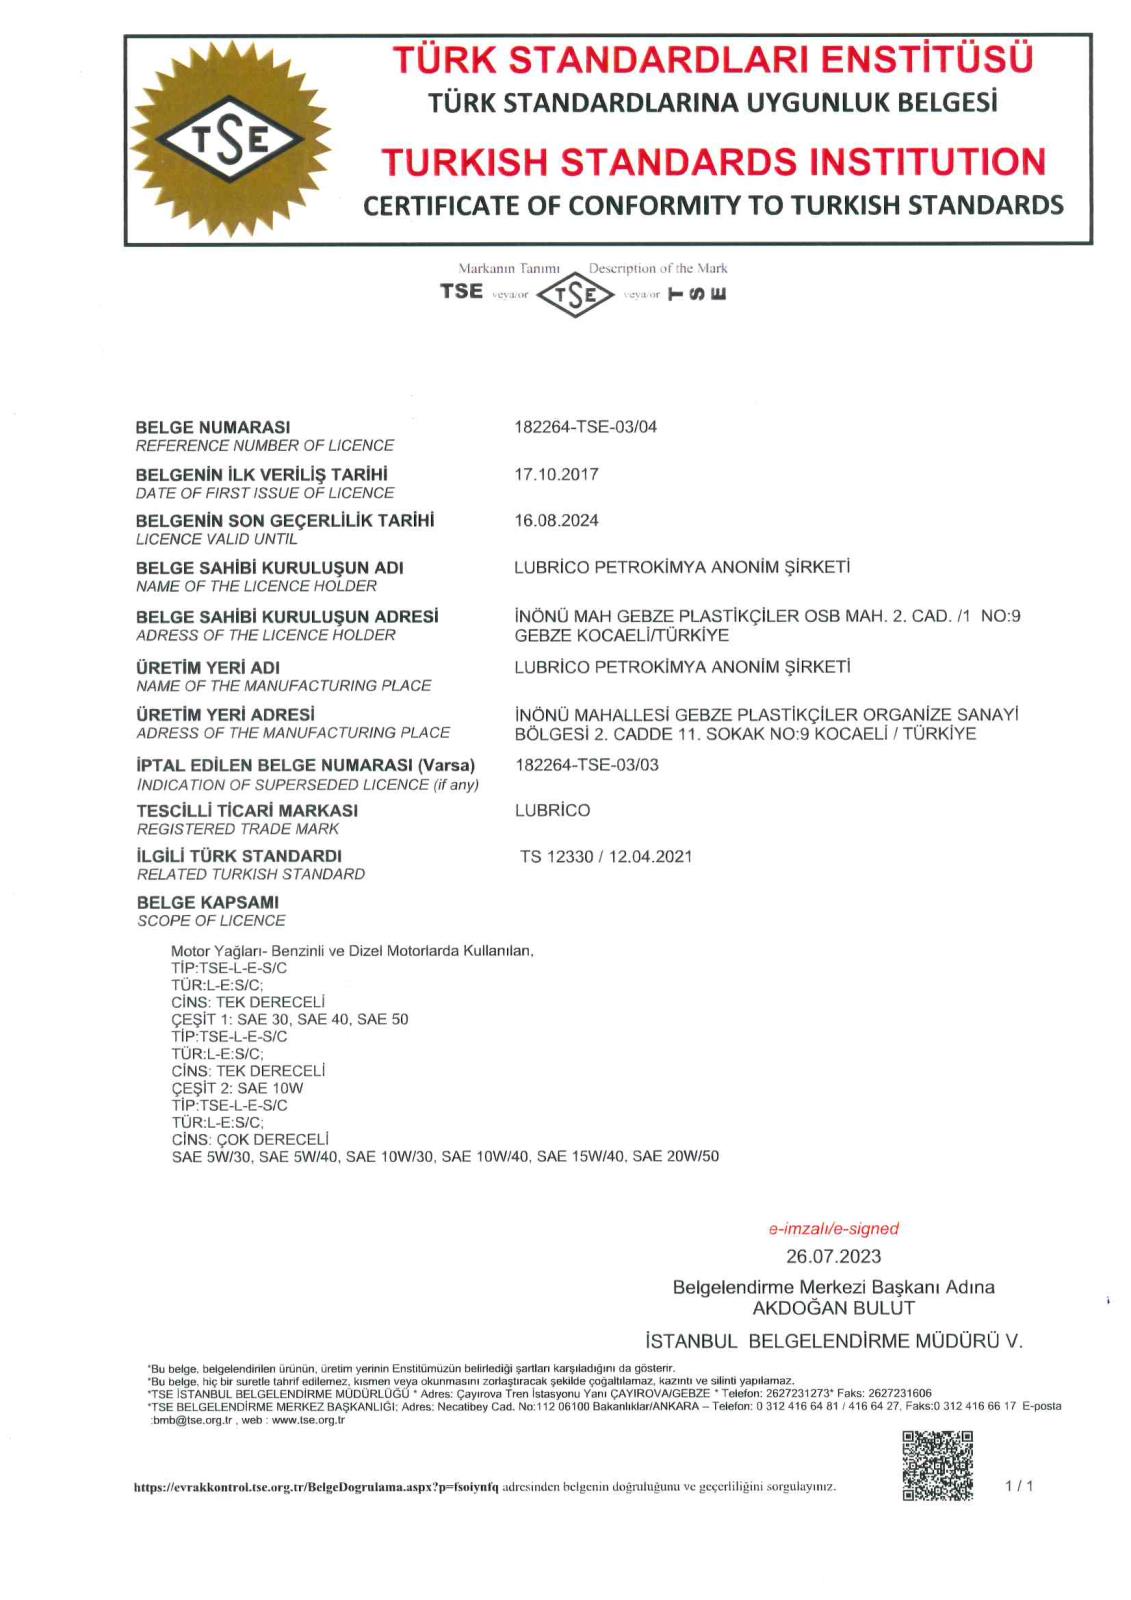 TSE Certificate of Conformity 12330